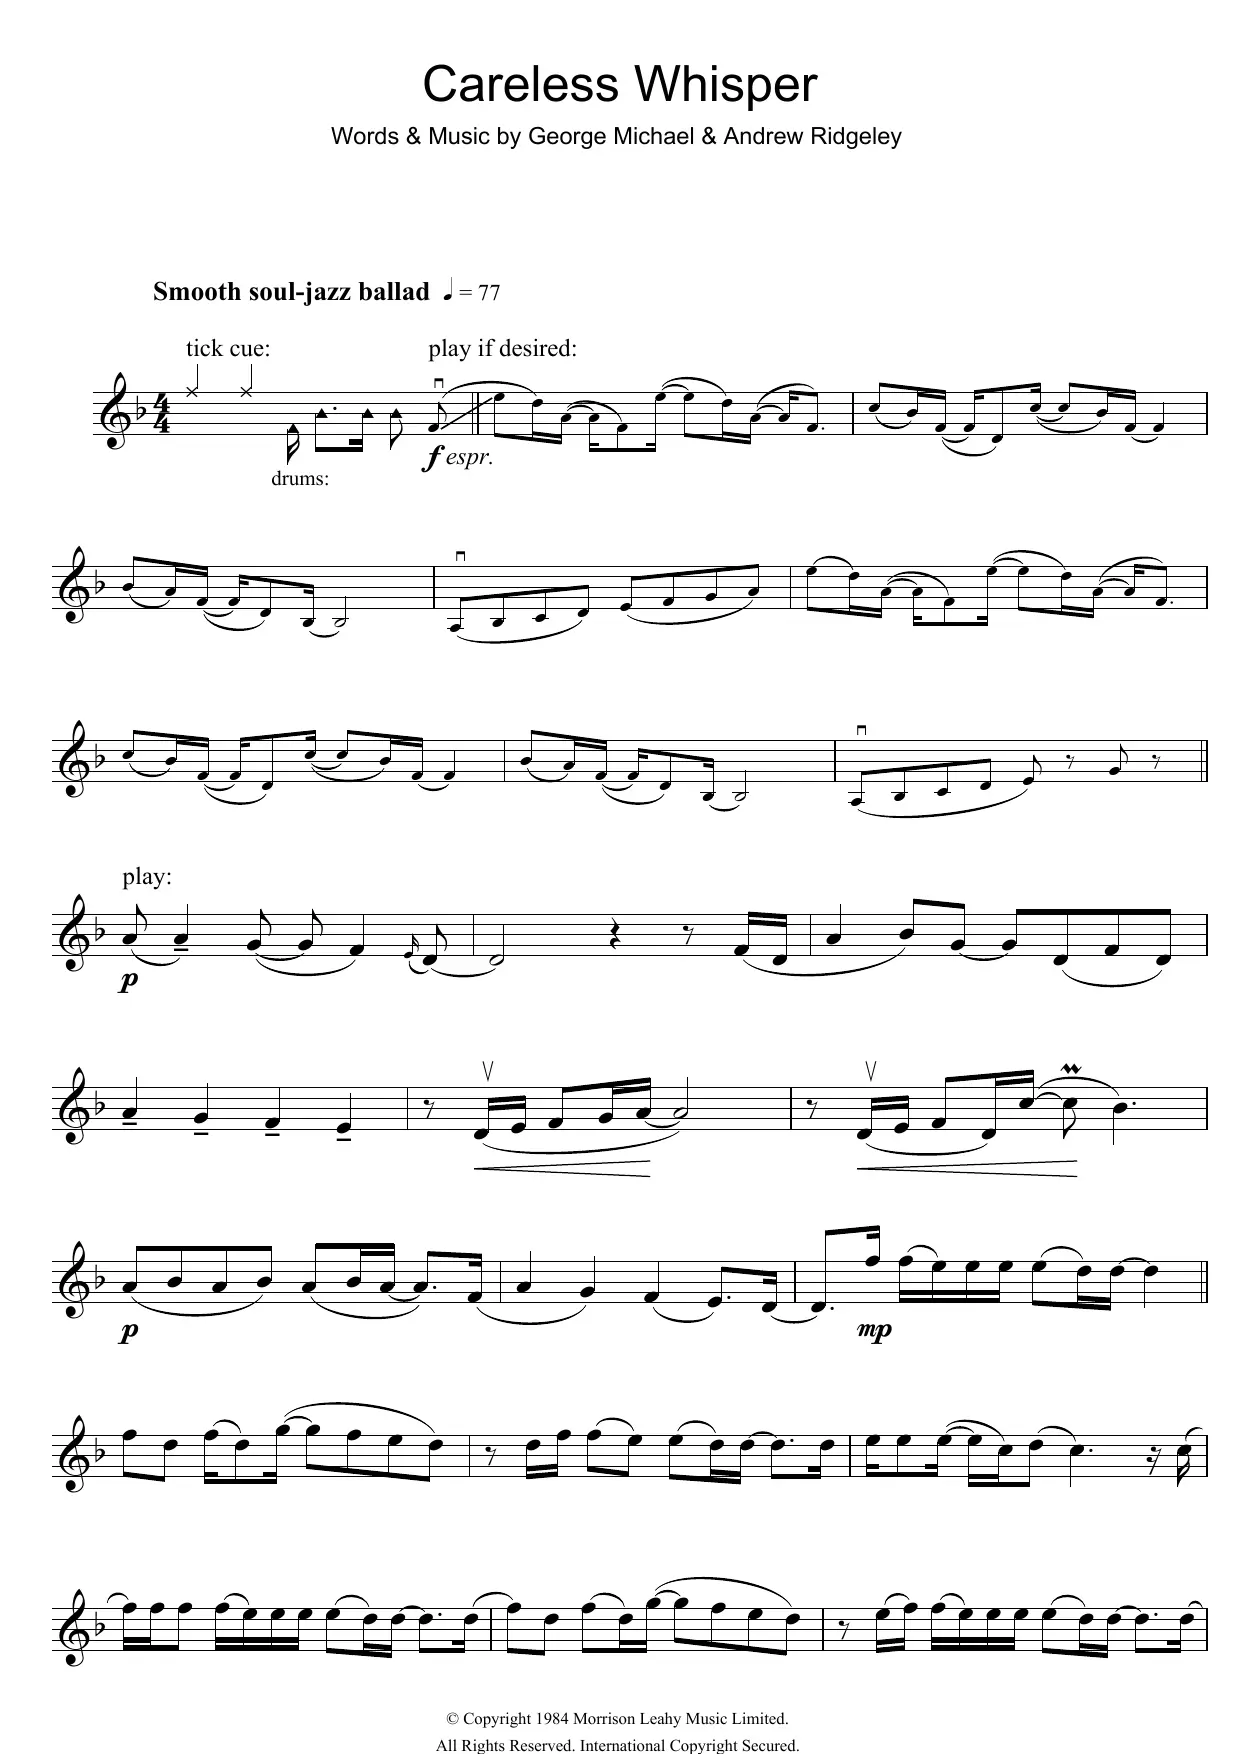 careless whisper violin notes - What Sax is Careless Whisper on